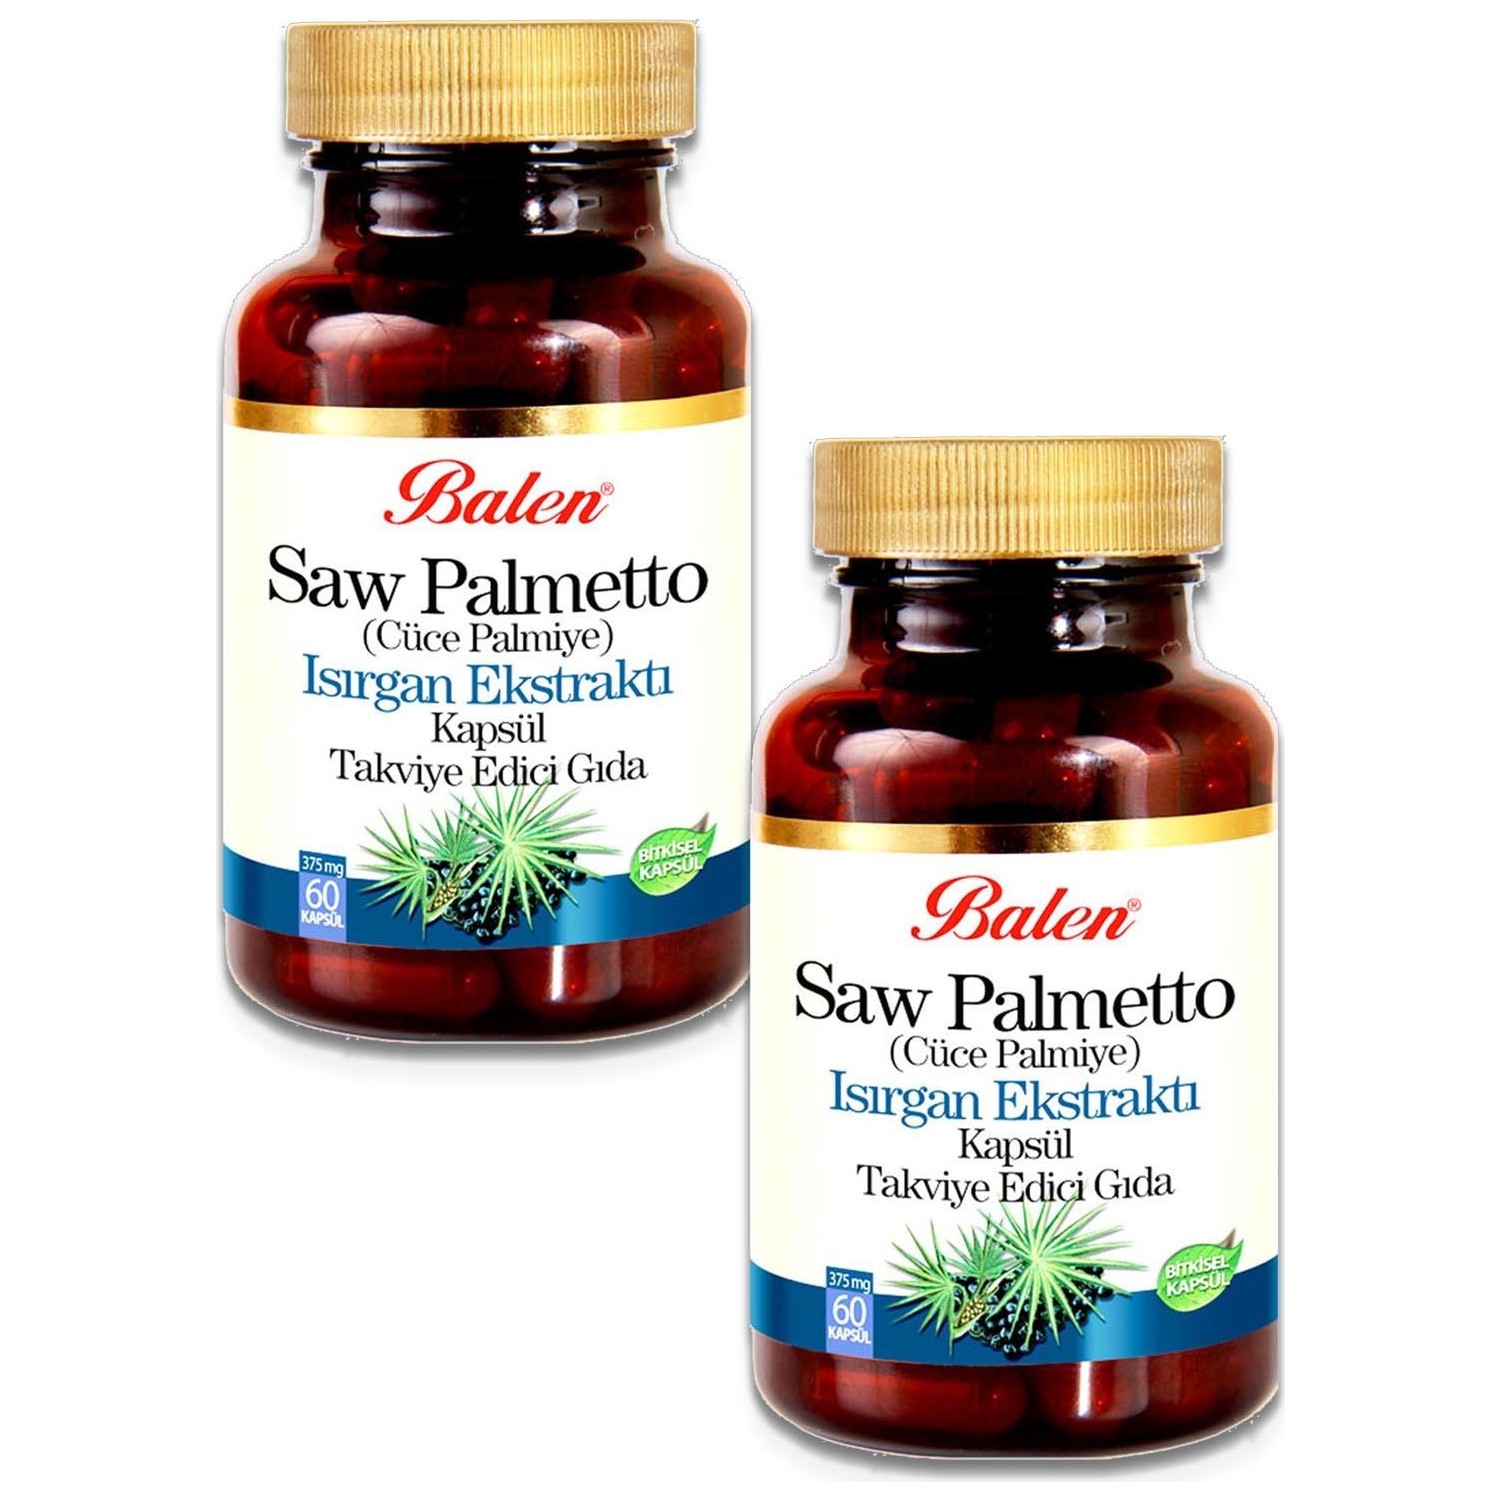 Пищевая добавка Balen Saw Palmetto Cinko 375 мг, 2 упаковки по 60 капсул